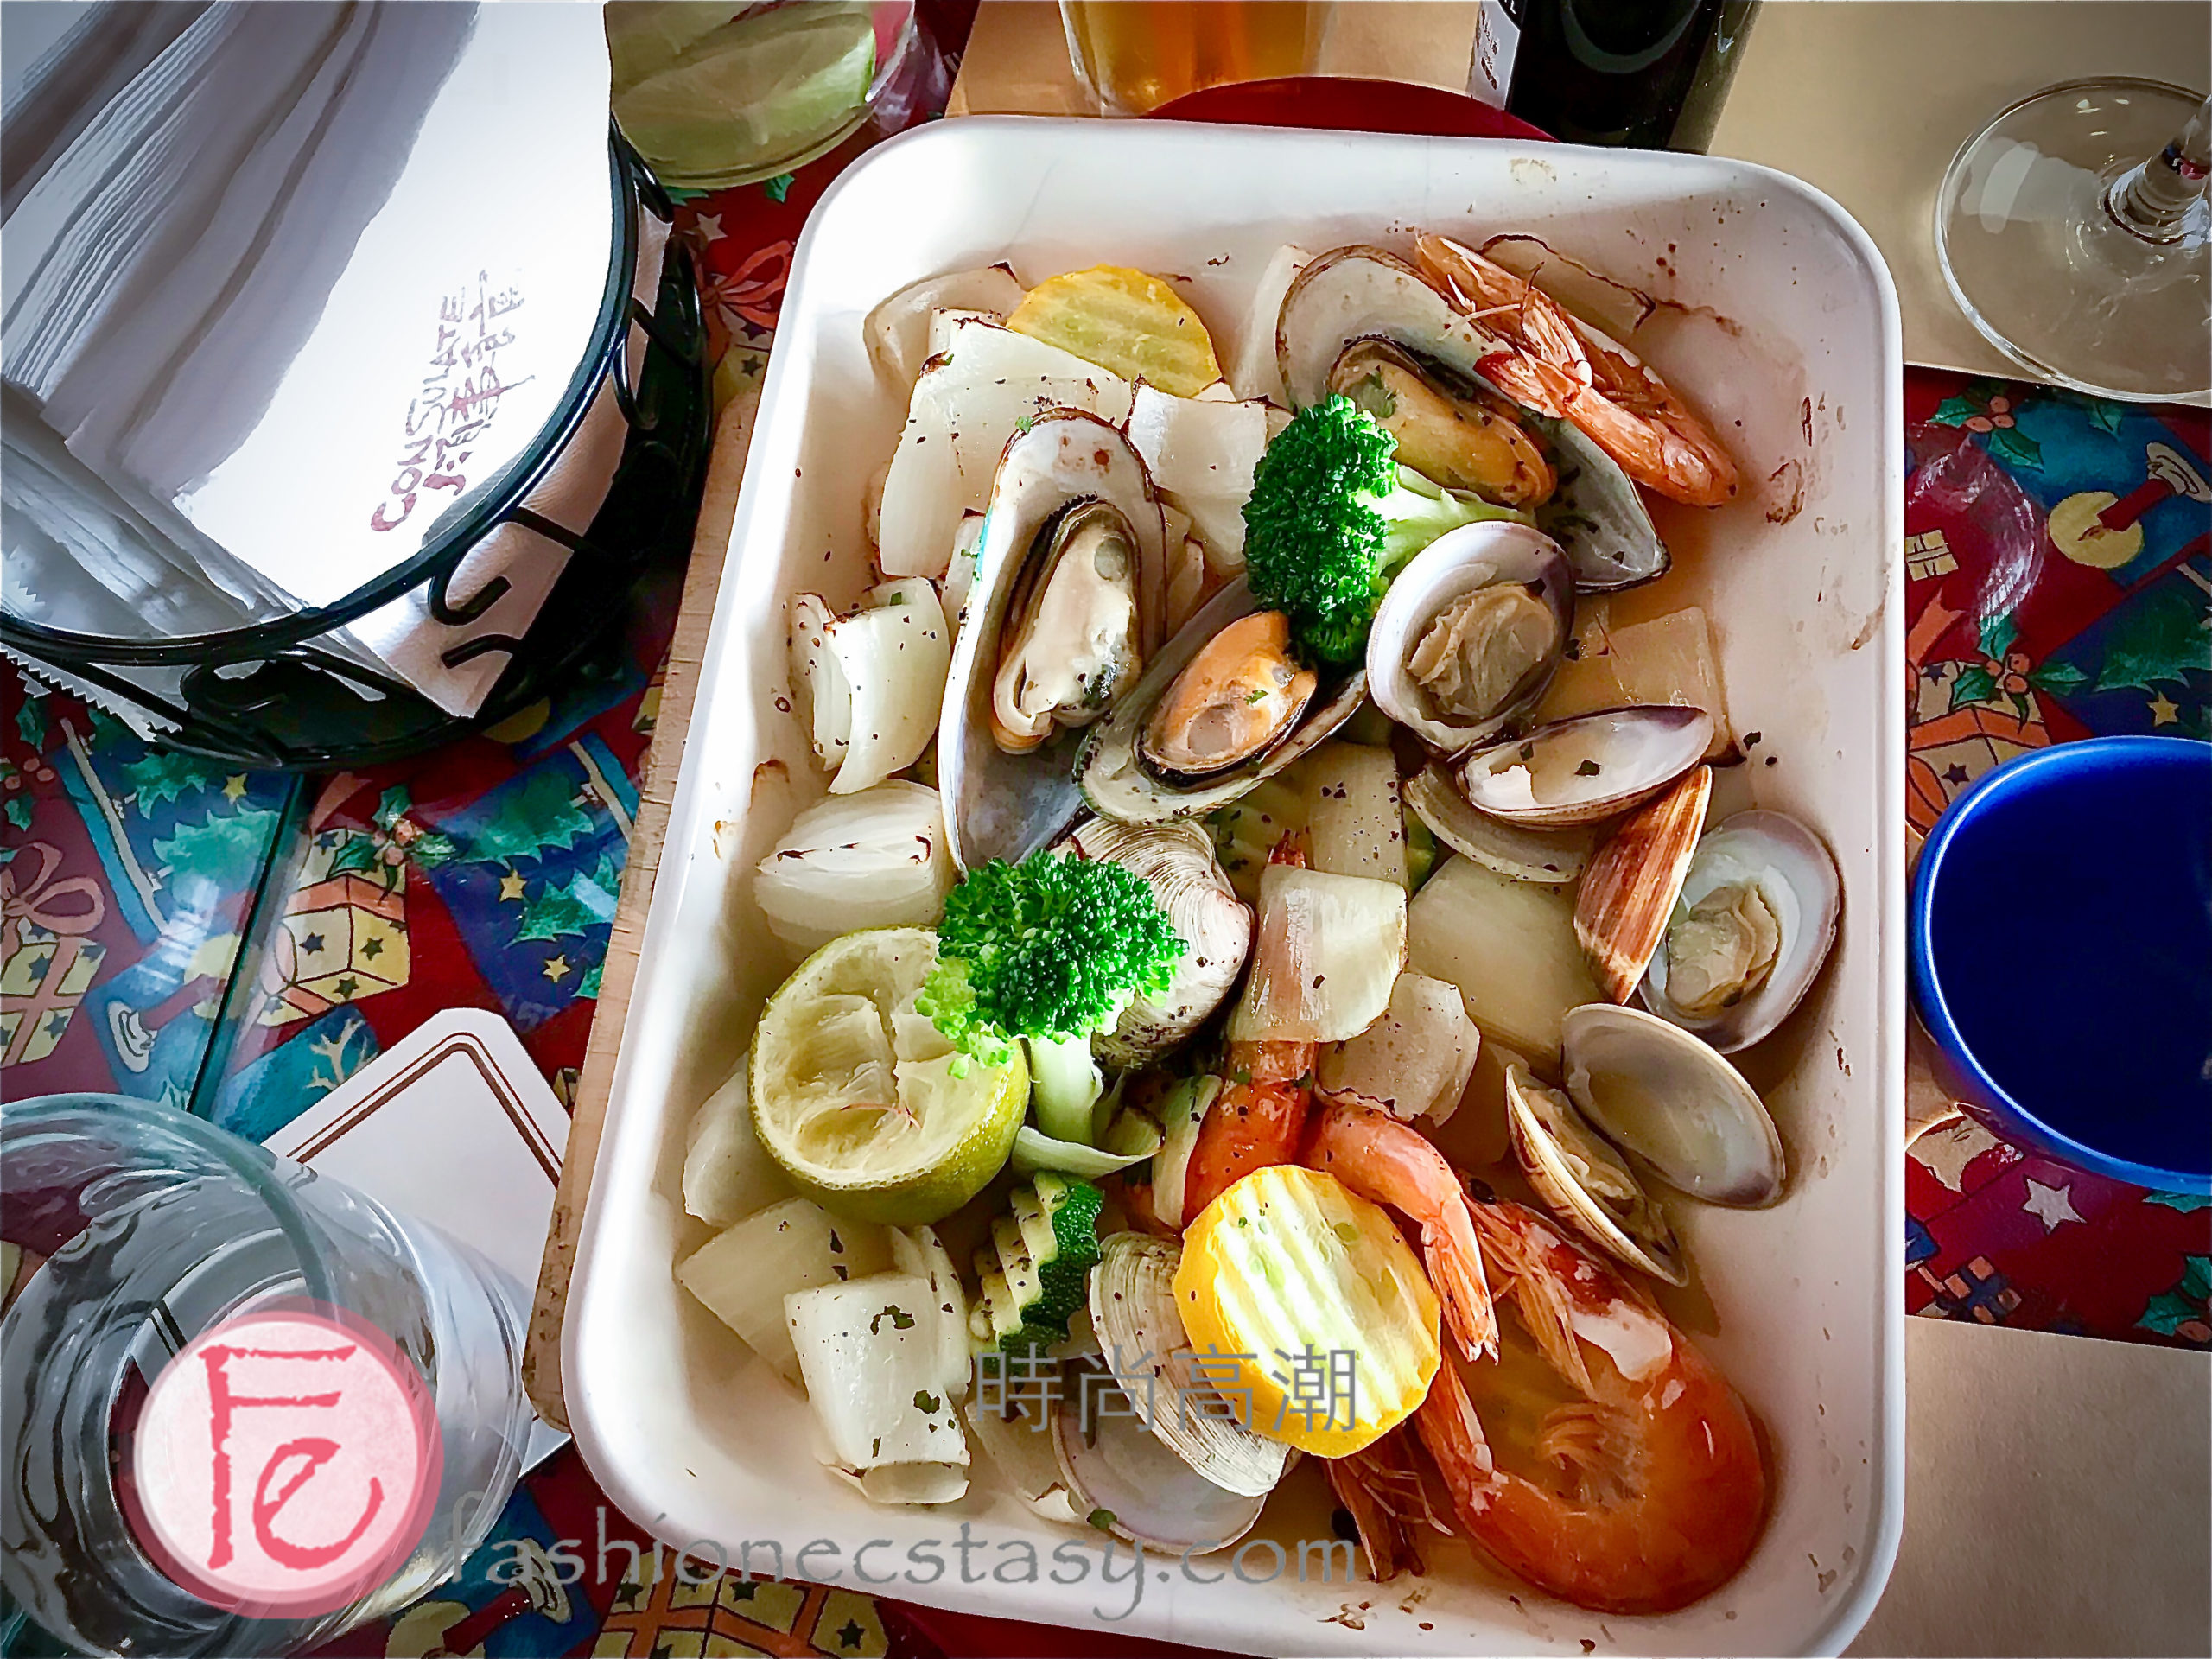 淡水領事館 地中海烤海鮮總匯」($380) / ”Roasted mixed seafood” ($380nt)